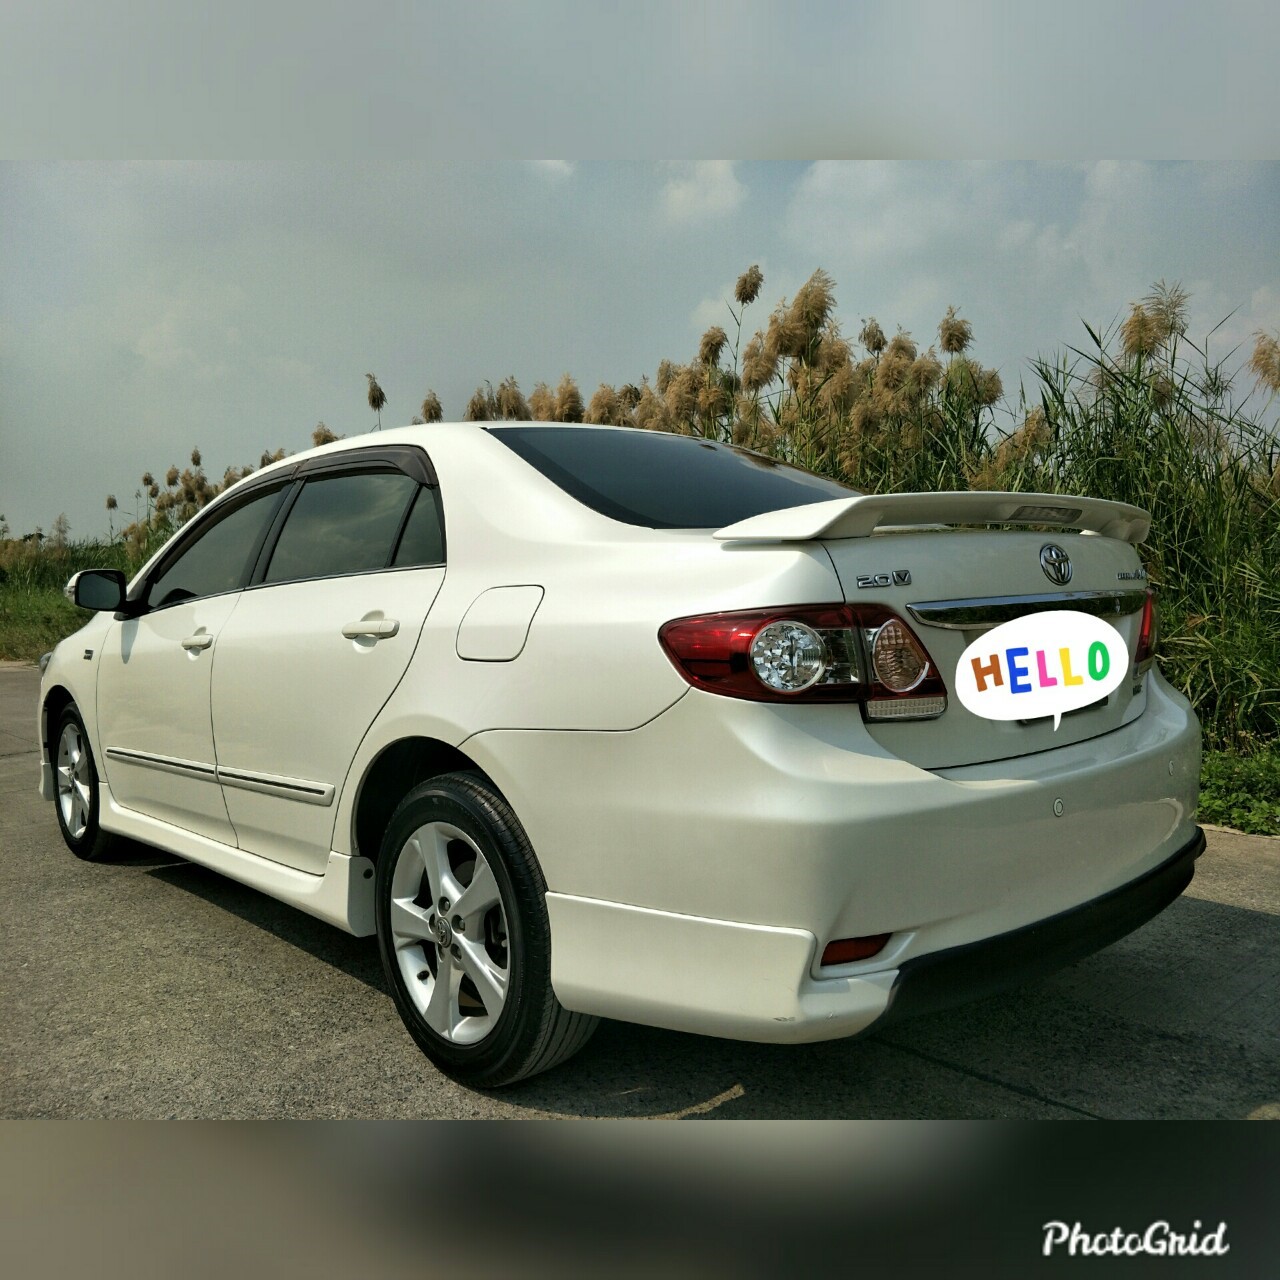 Toyota Corolla Altis ปี 2011 สีขาว